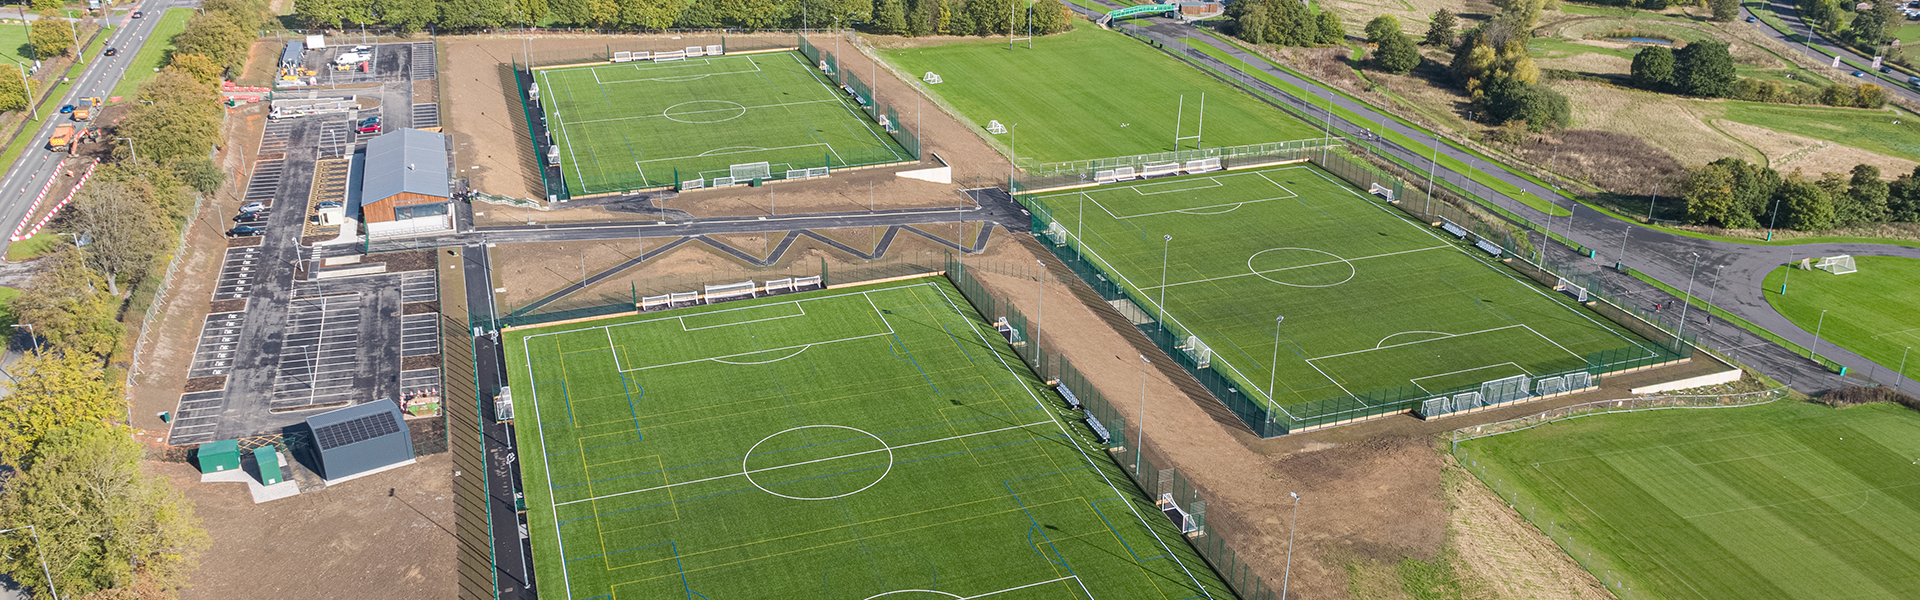 Bodington Football Hub pitches - drone view